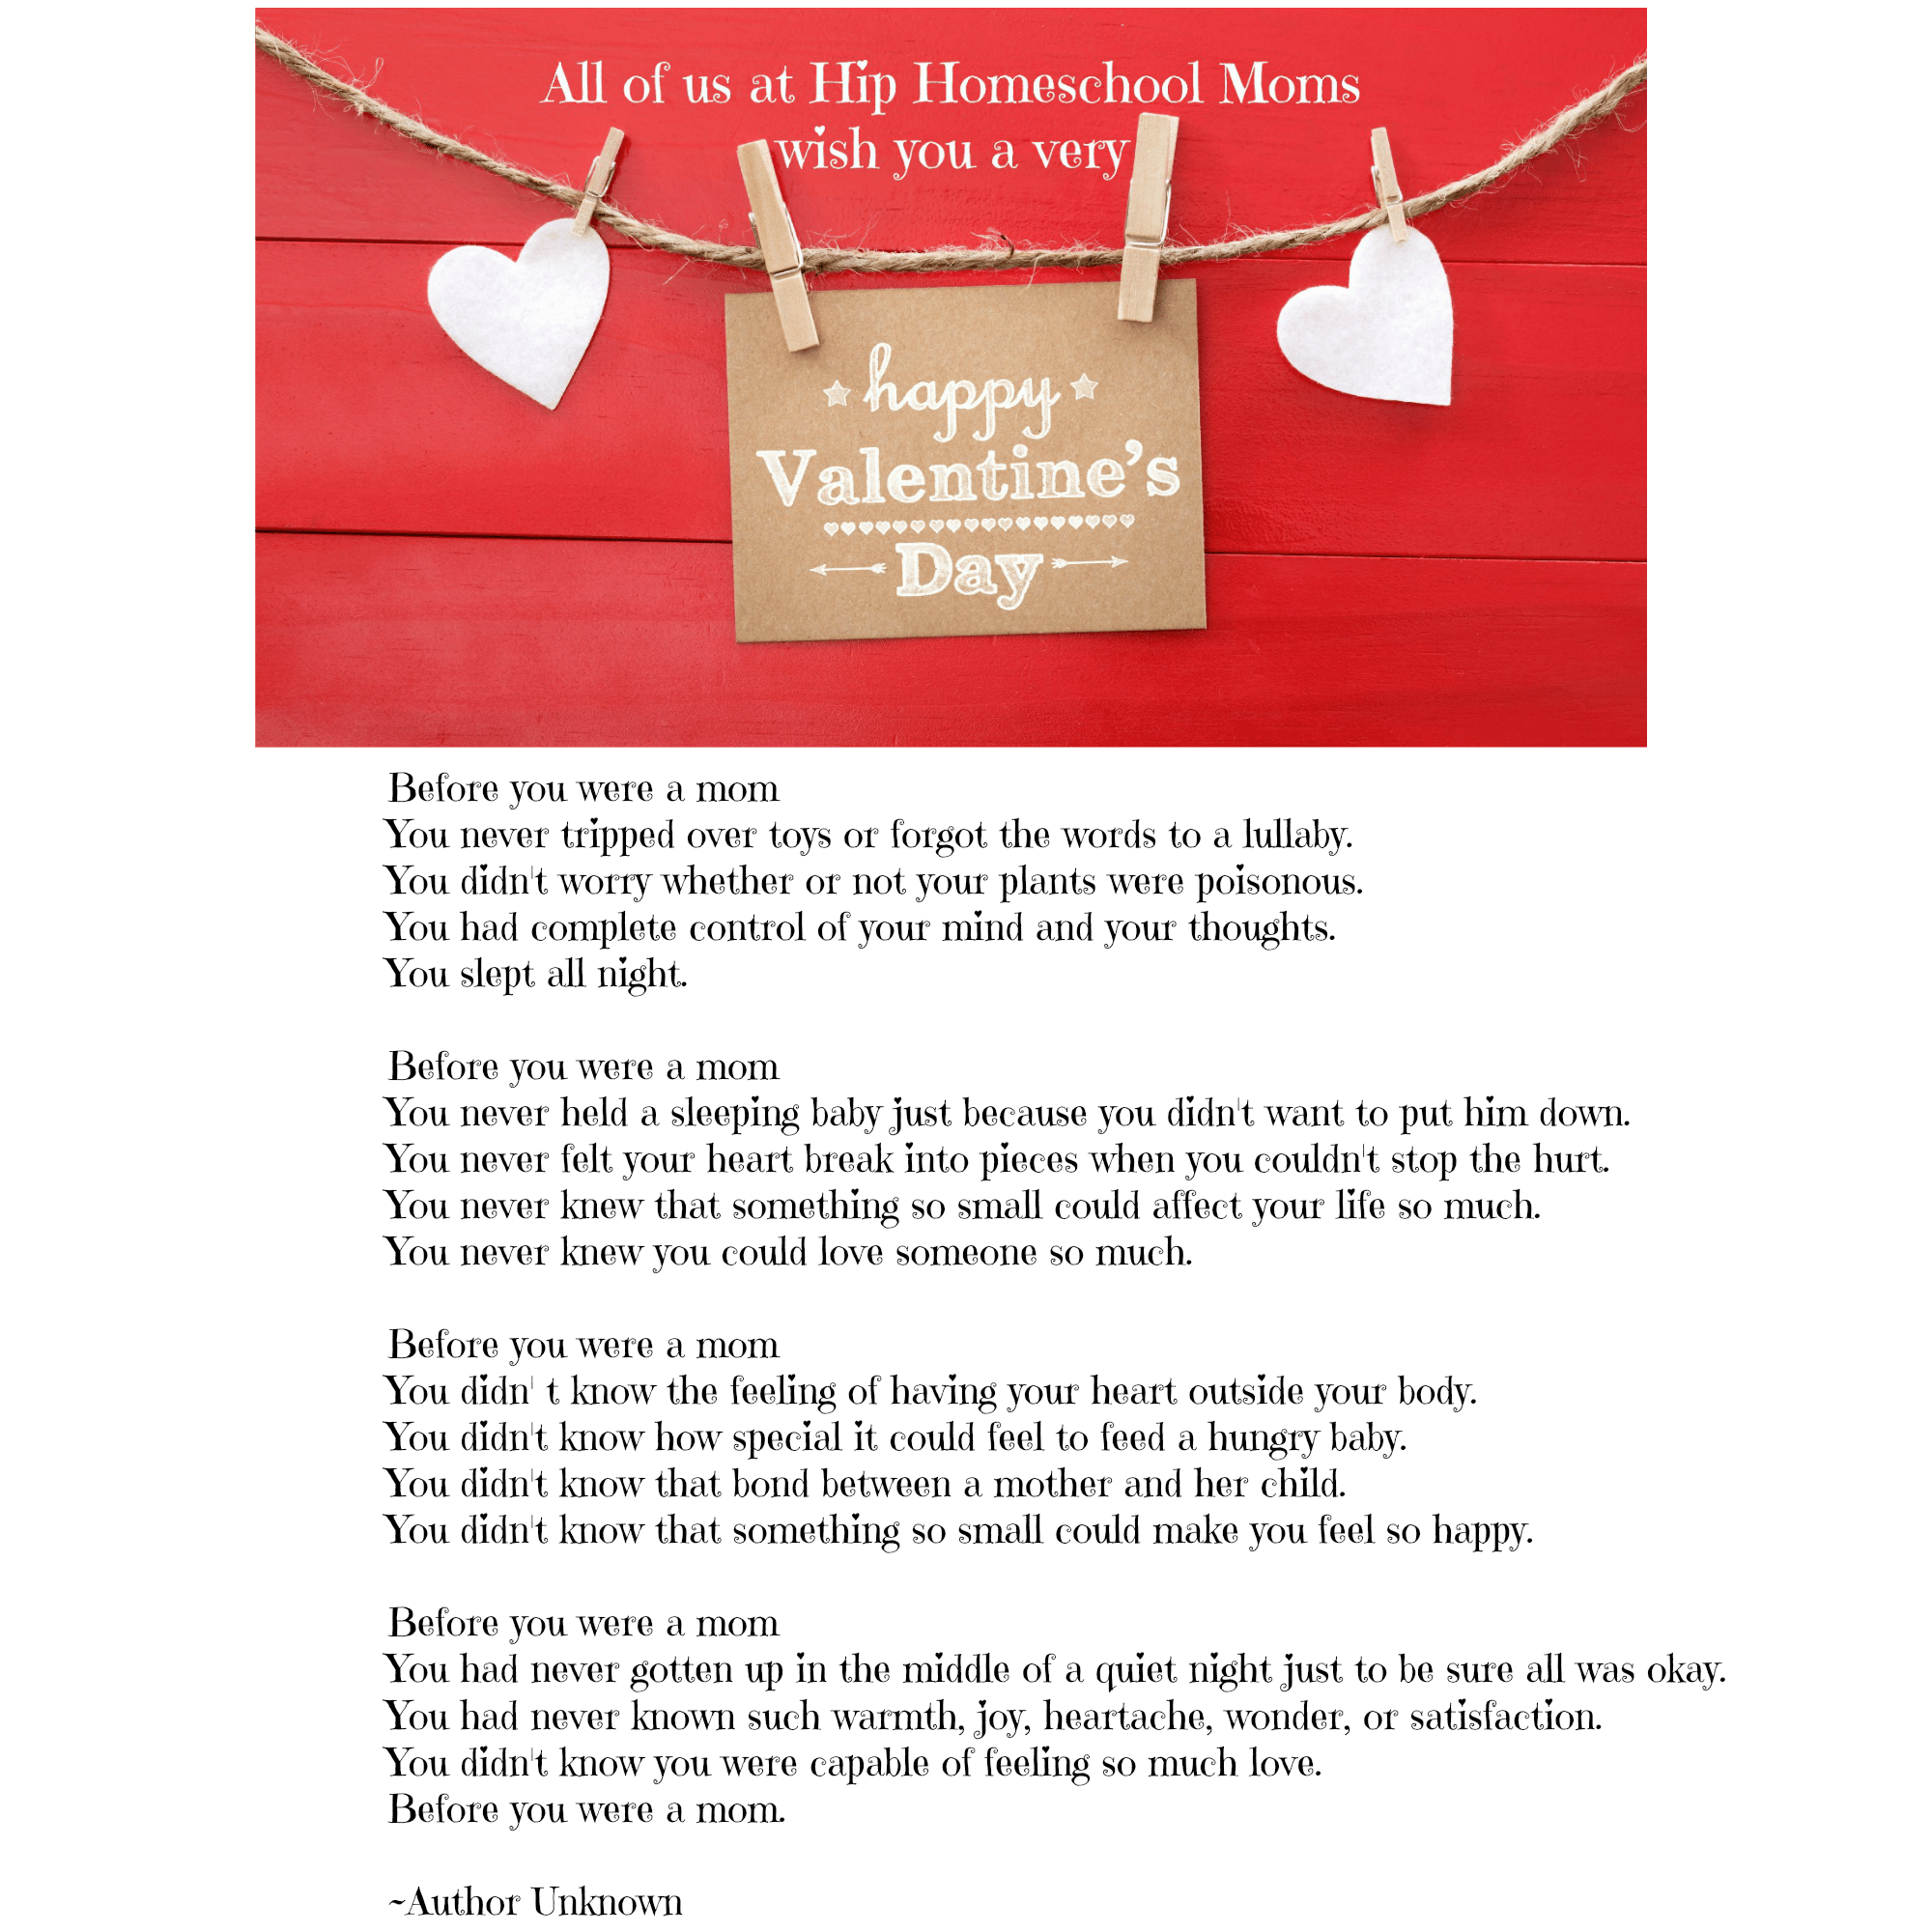 HHM Valentines Day 2015